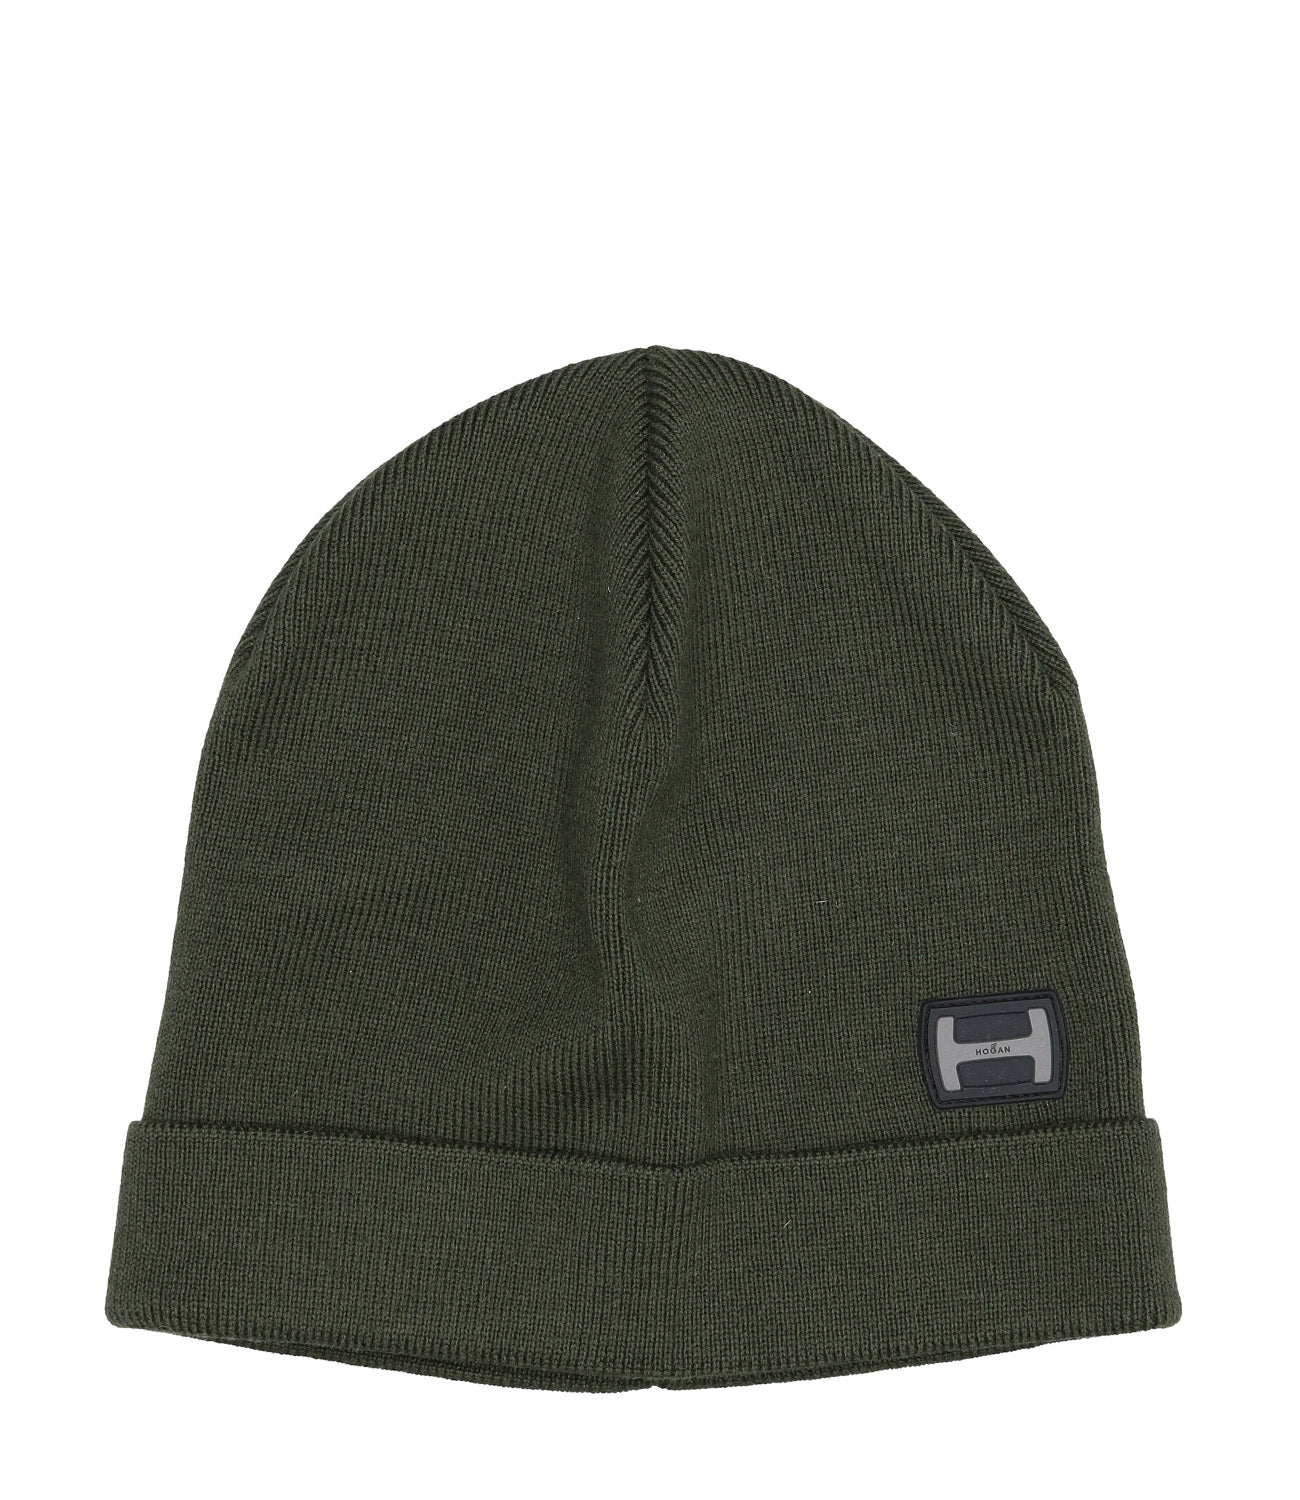 Hogan | Military Green Hat